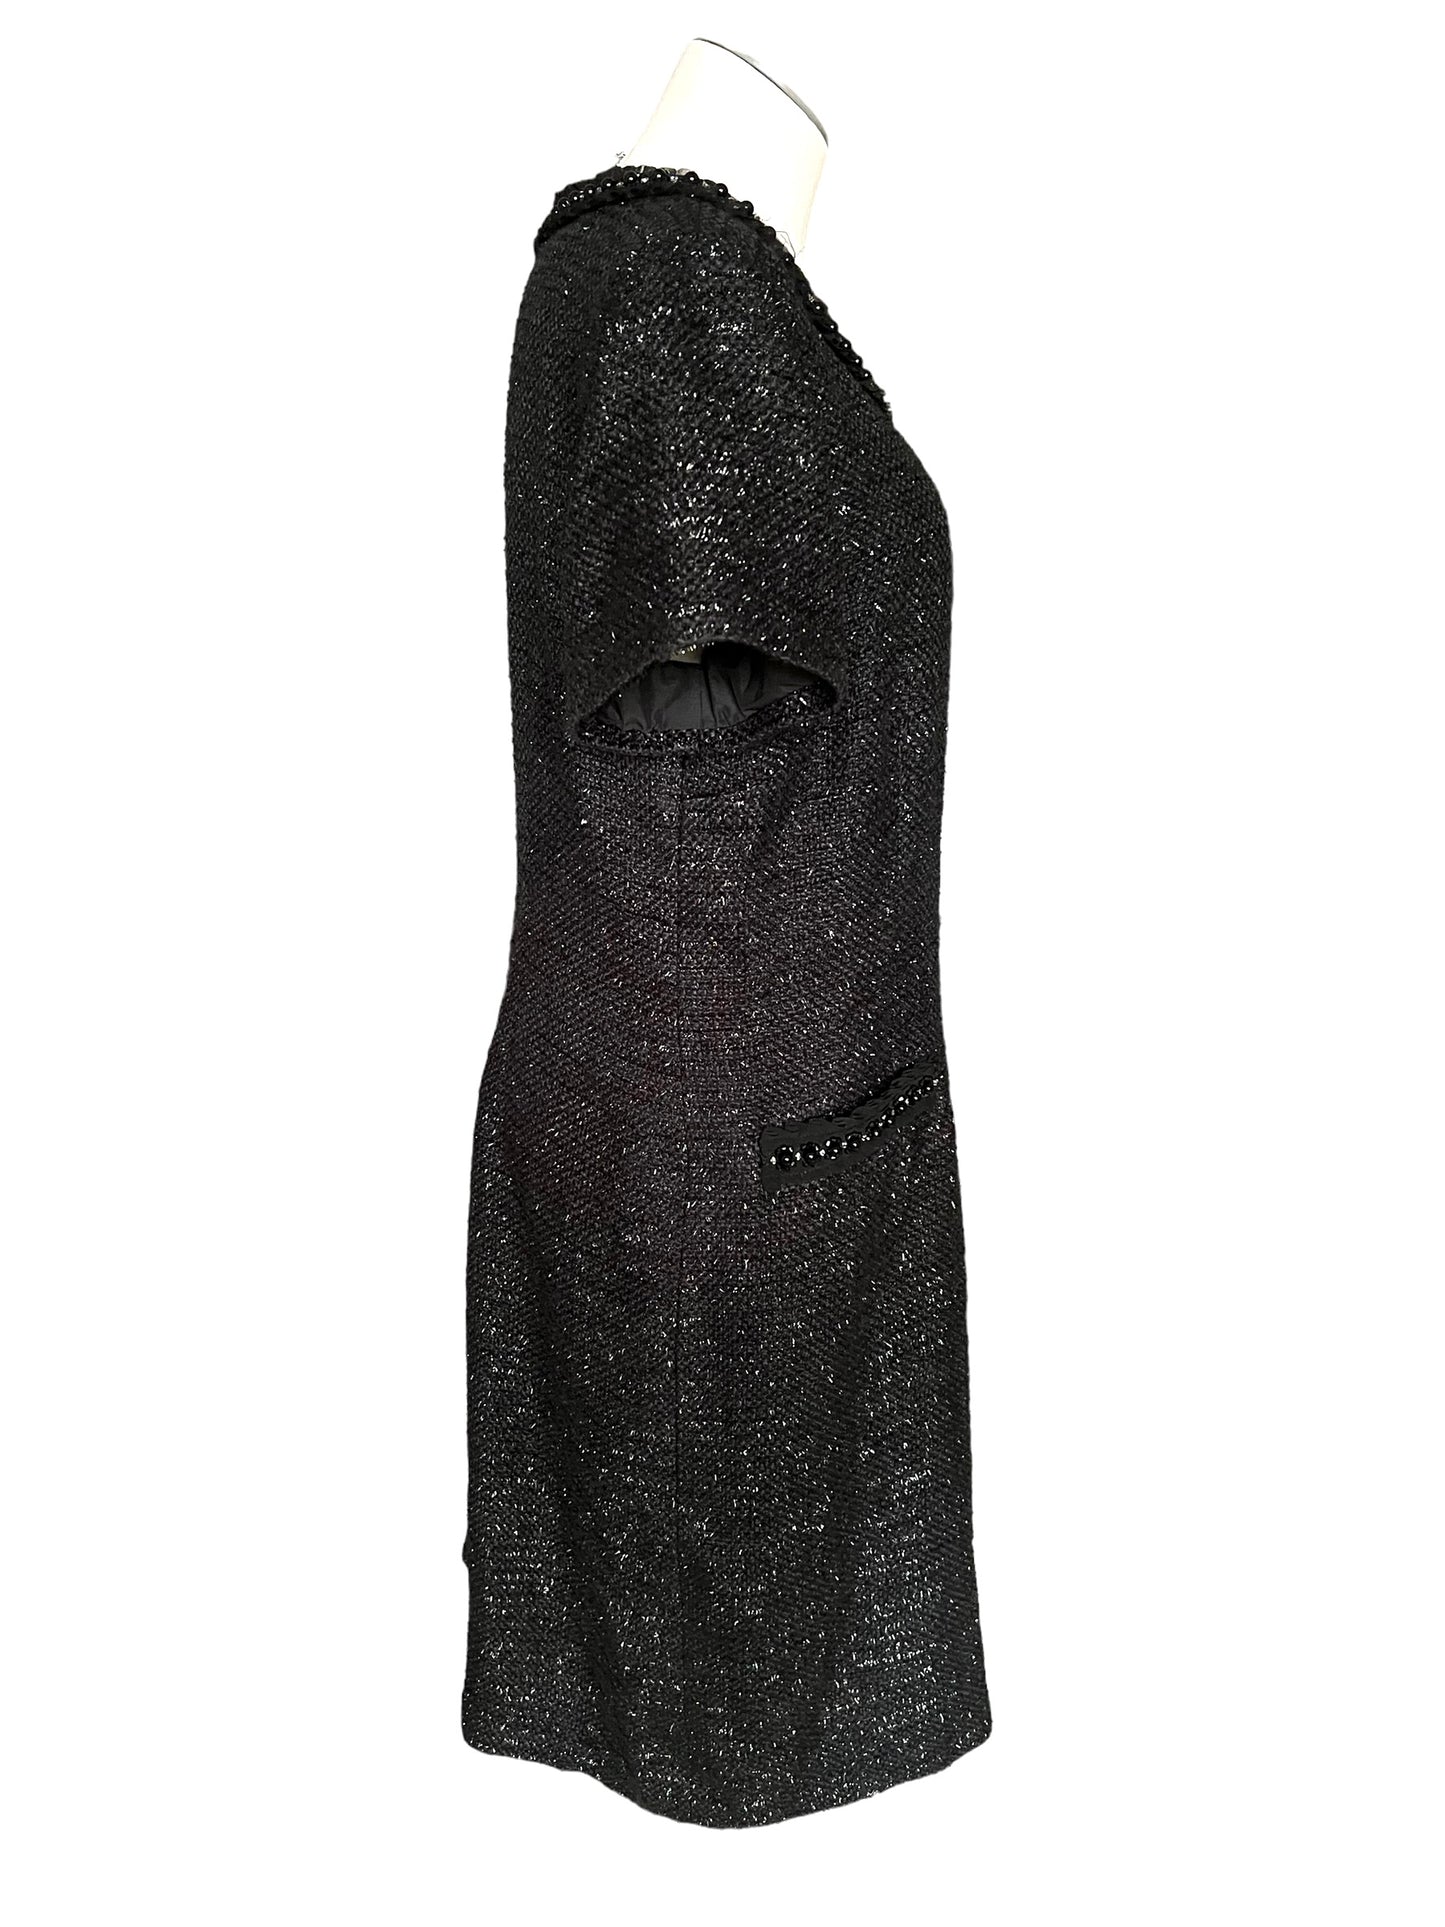 Talbots Size 12 Black Metallic Tweed Dress